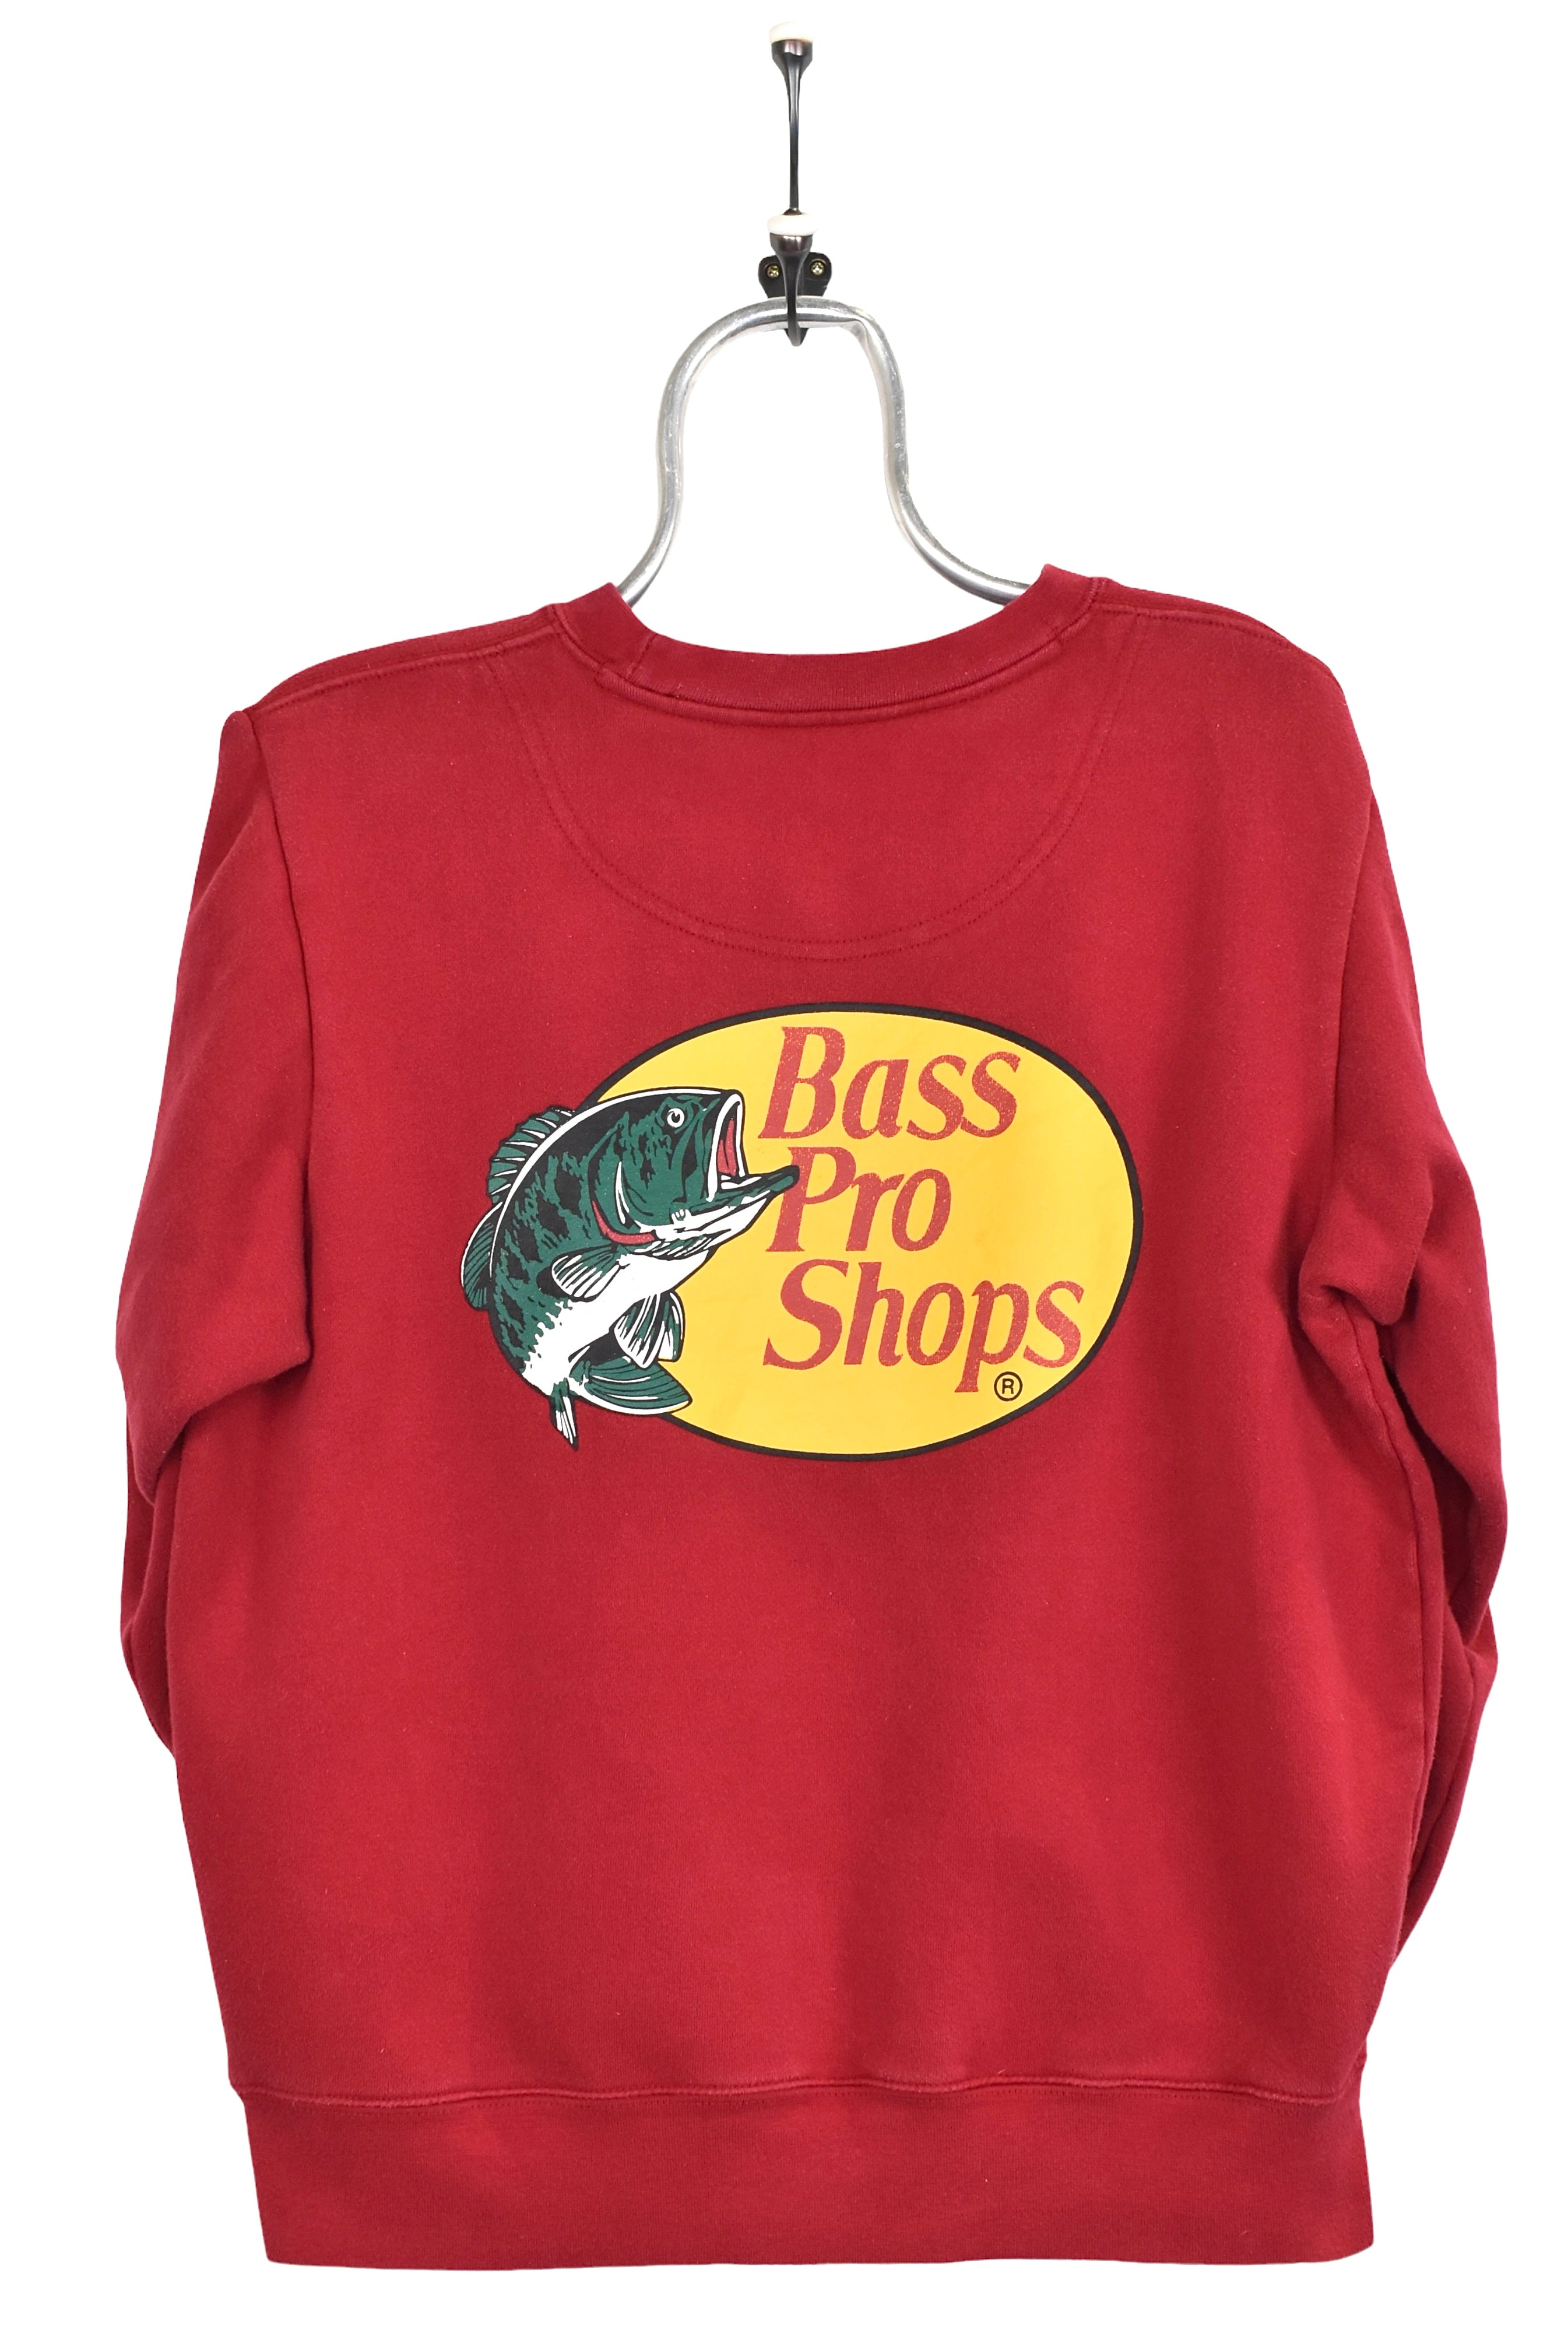 Vintage Bass Pro Shops sweatshirt, red graphic crewneck - AU Small